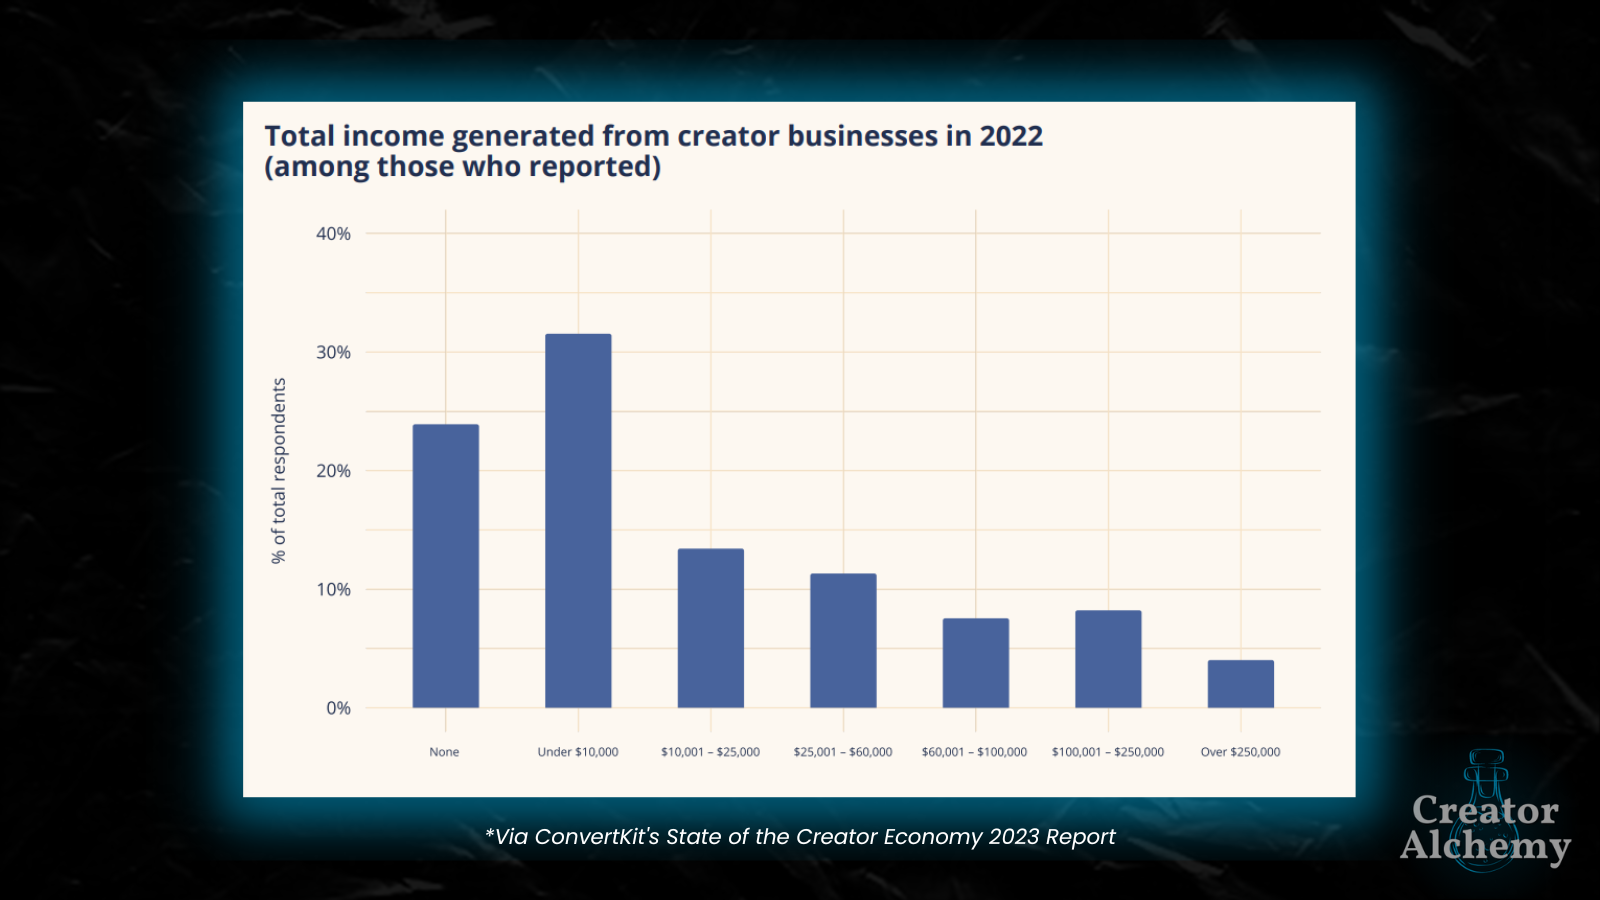 ConvertKit state of the creator economy report 2023